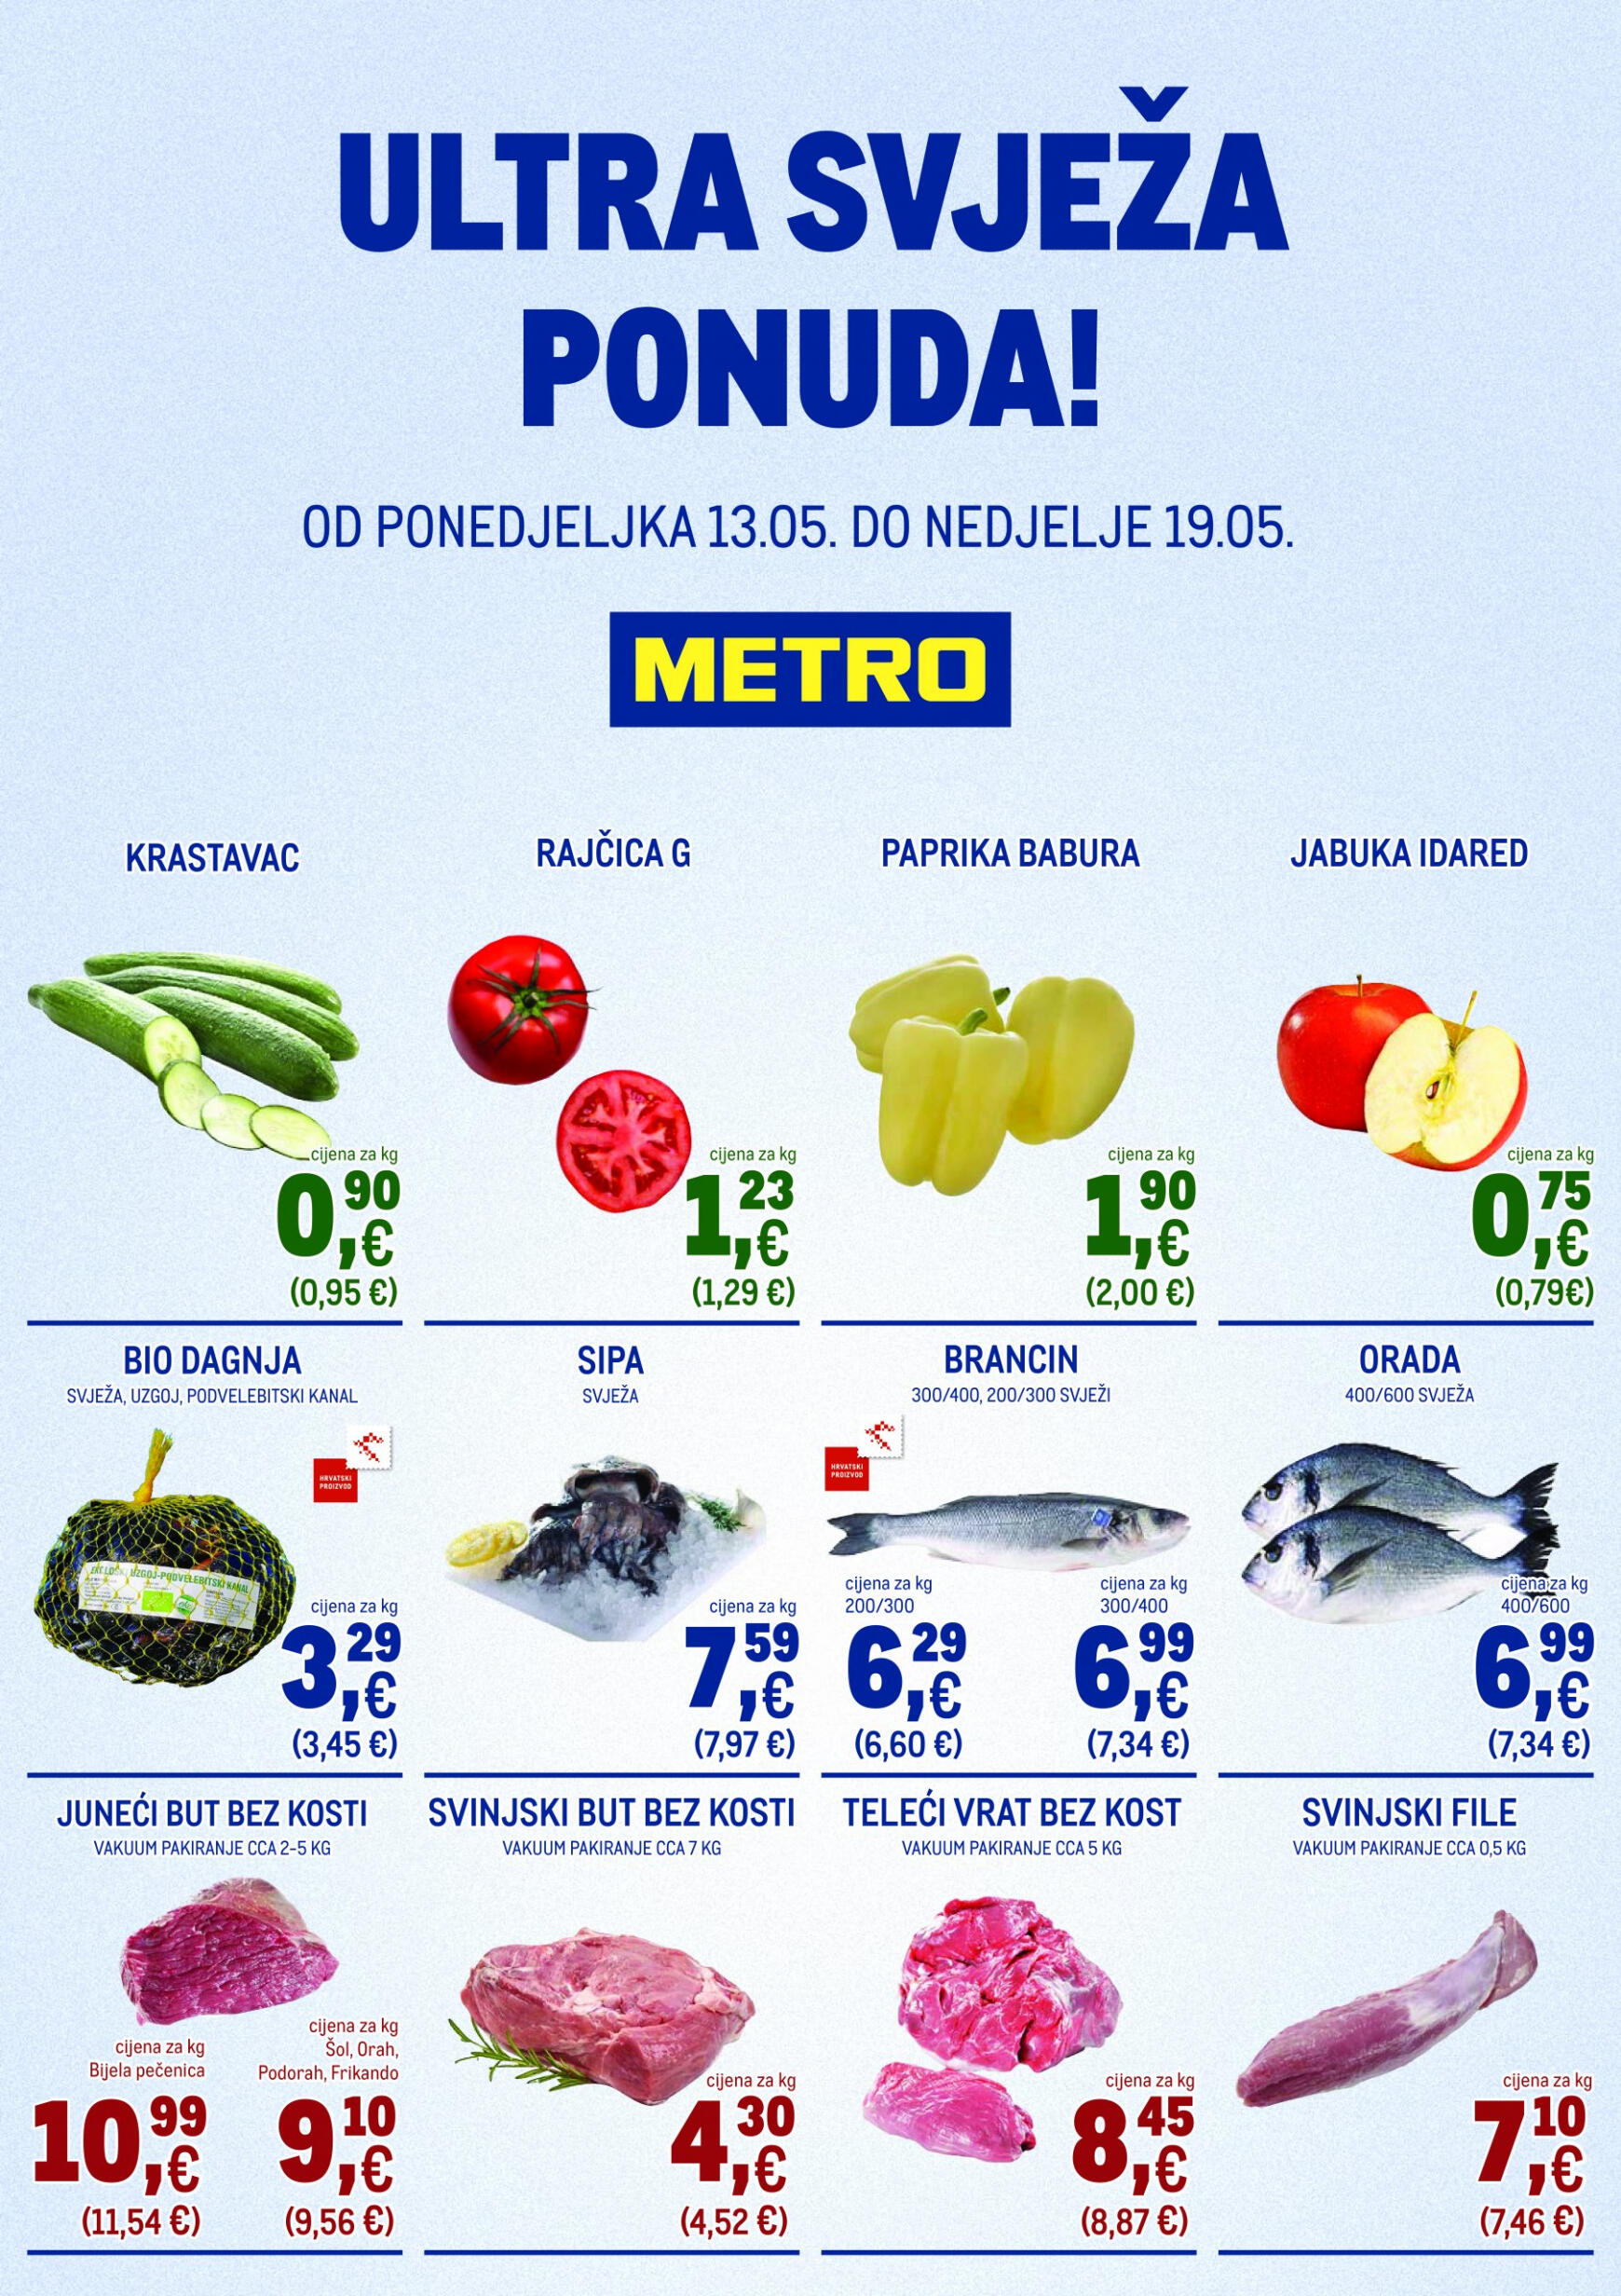 metro - Novi katalog Metro - Ultra svježa ponuda 13.05. - 19.05.